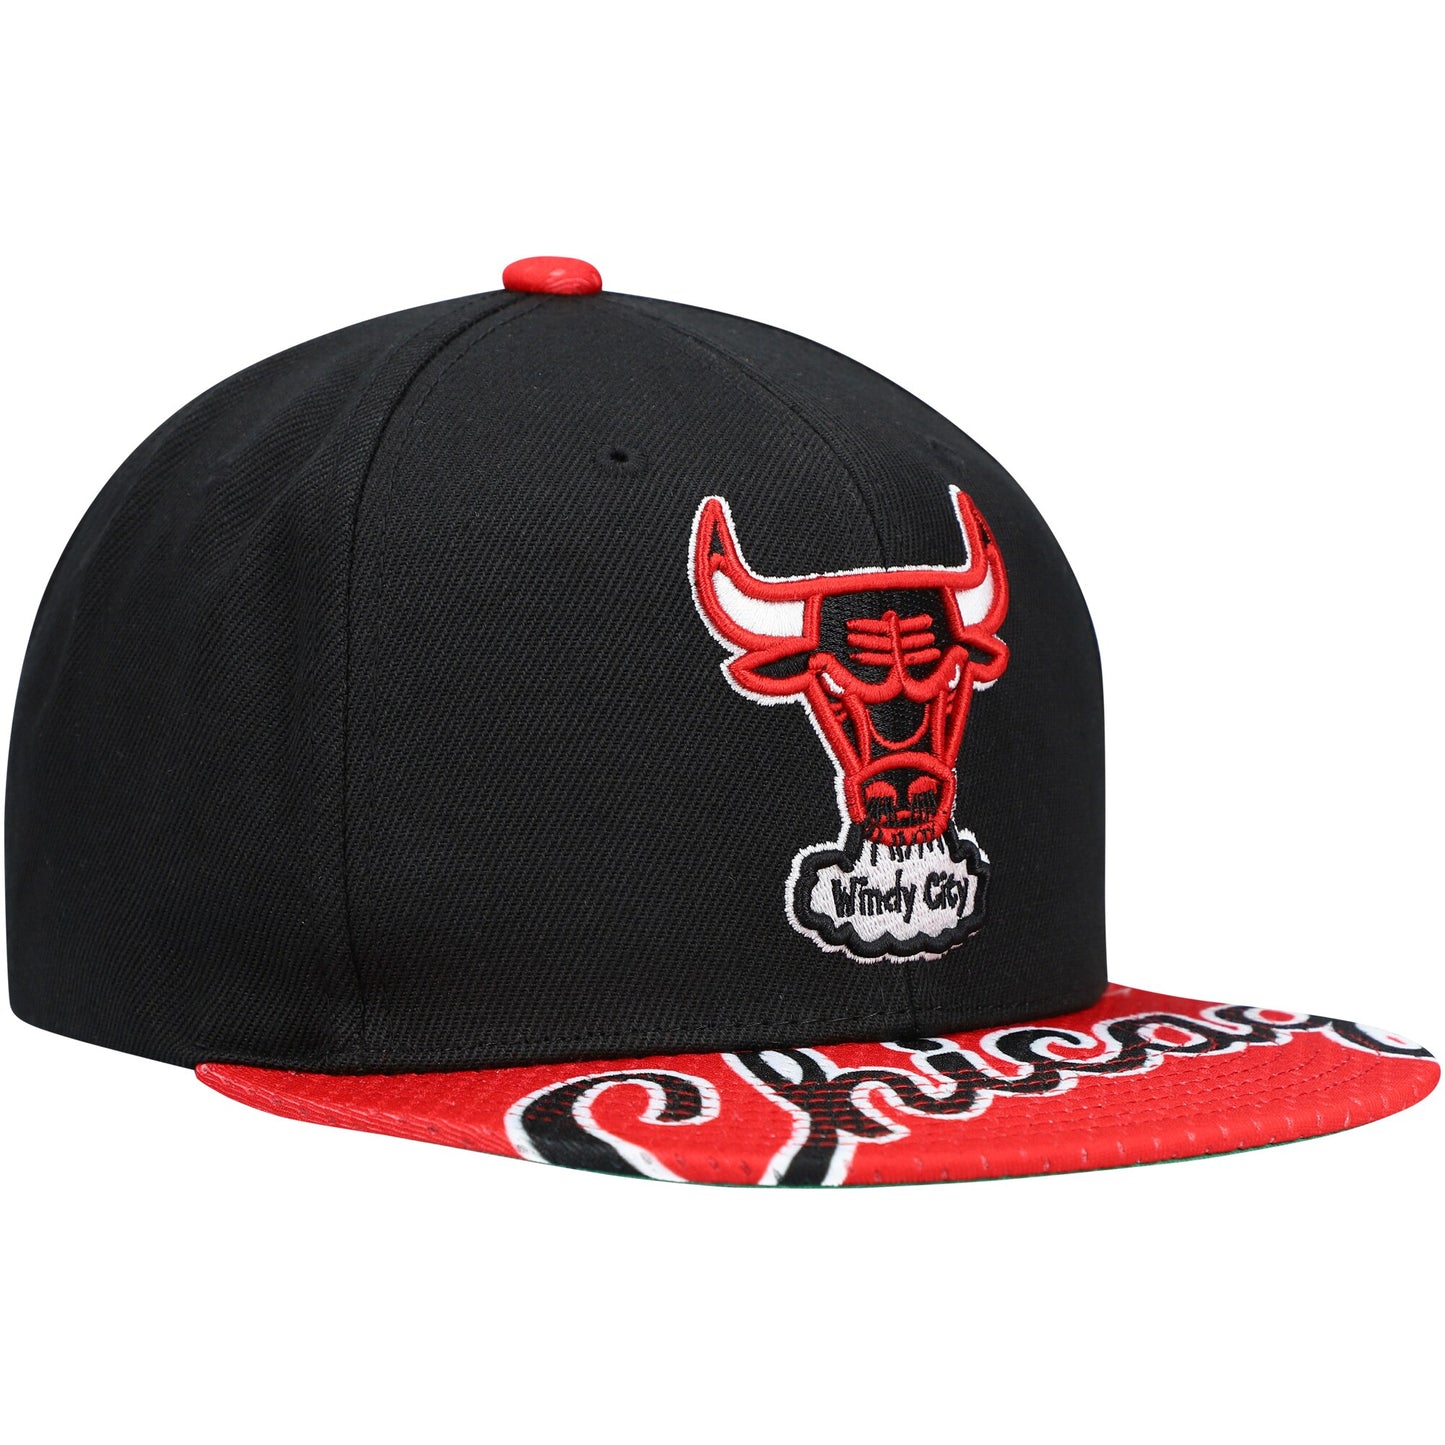 Men's Mitchell & Ness Black/Red Chicago Bulls Hardwood Classics Snapshot Adjustable Snapback Hat